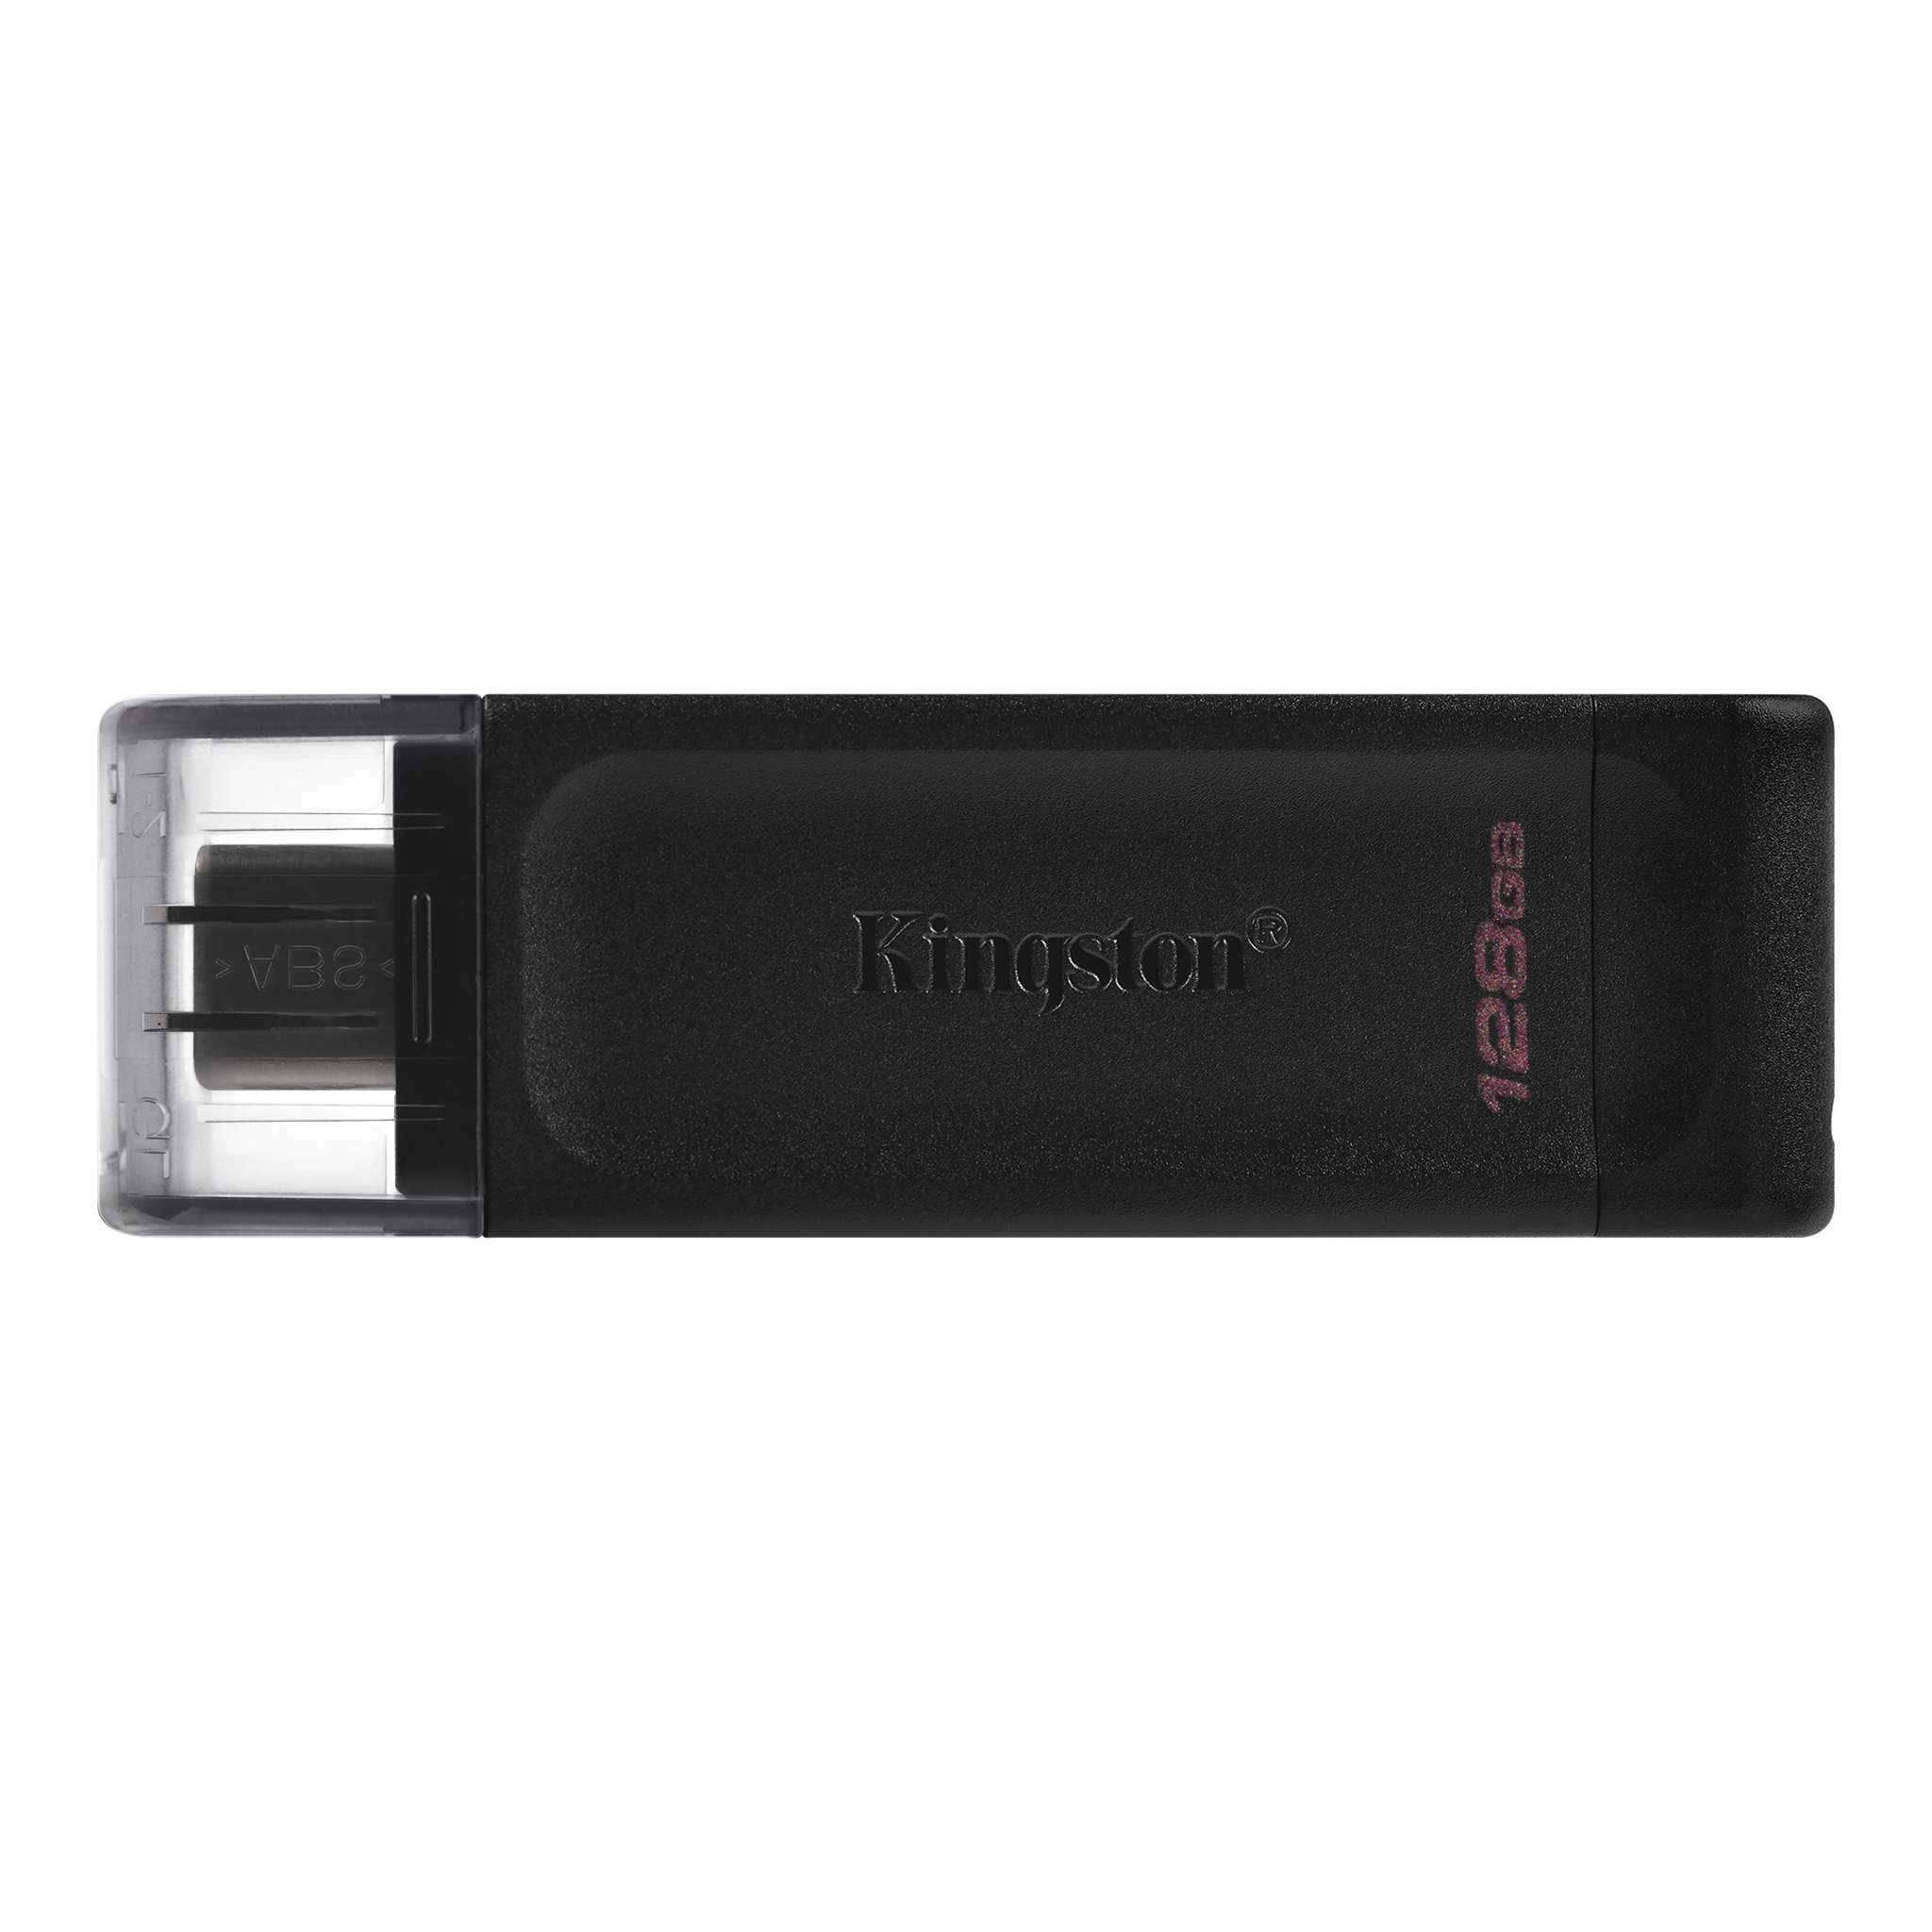 USB Flash Drive Kingston DataTraveler 70 128GB